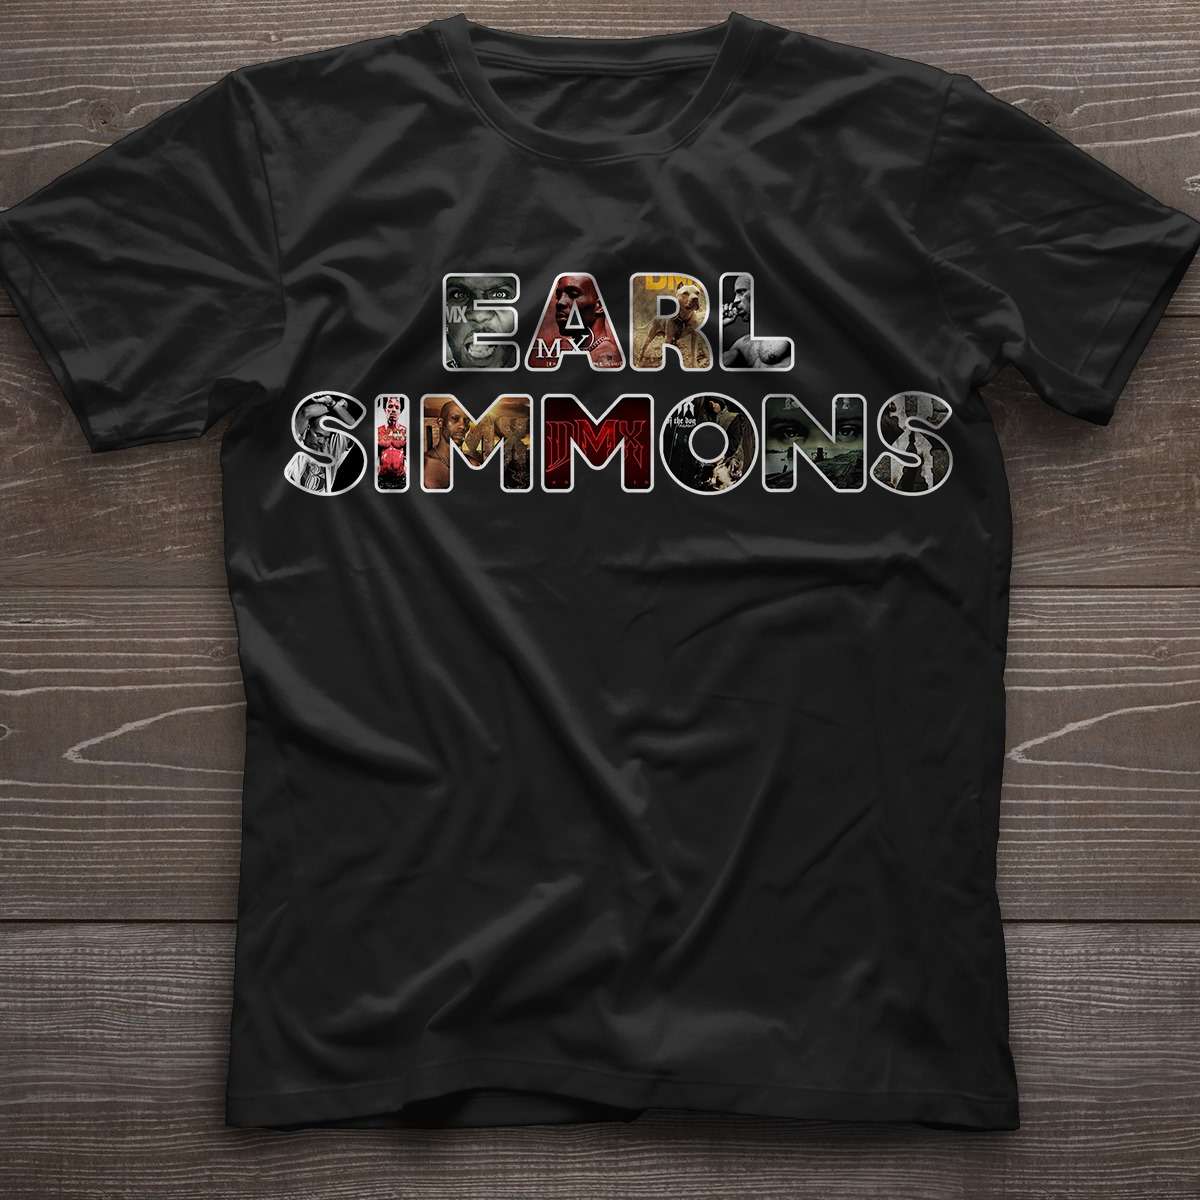 Earl simmons - Rapper DMX, Dark Man X